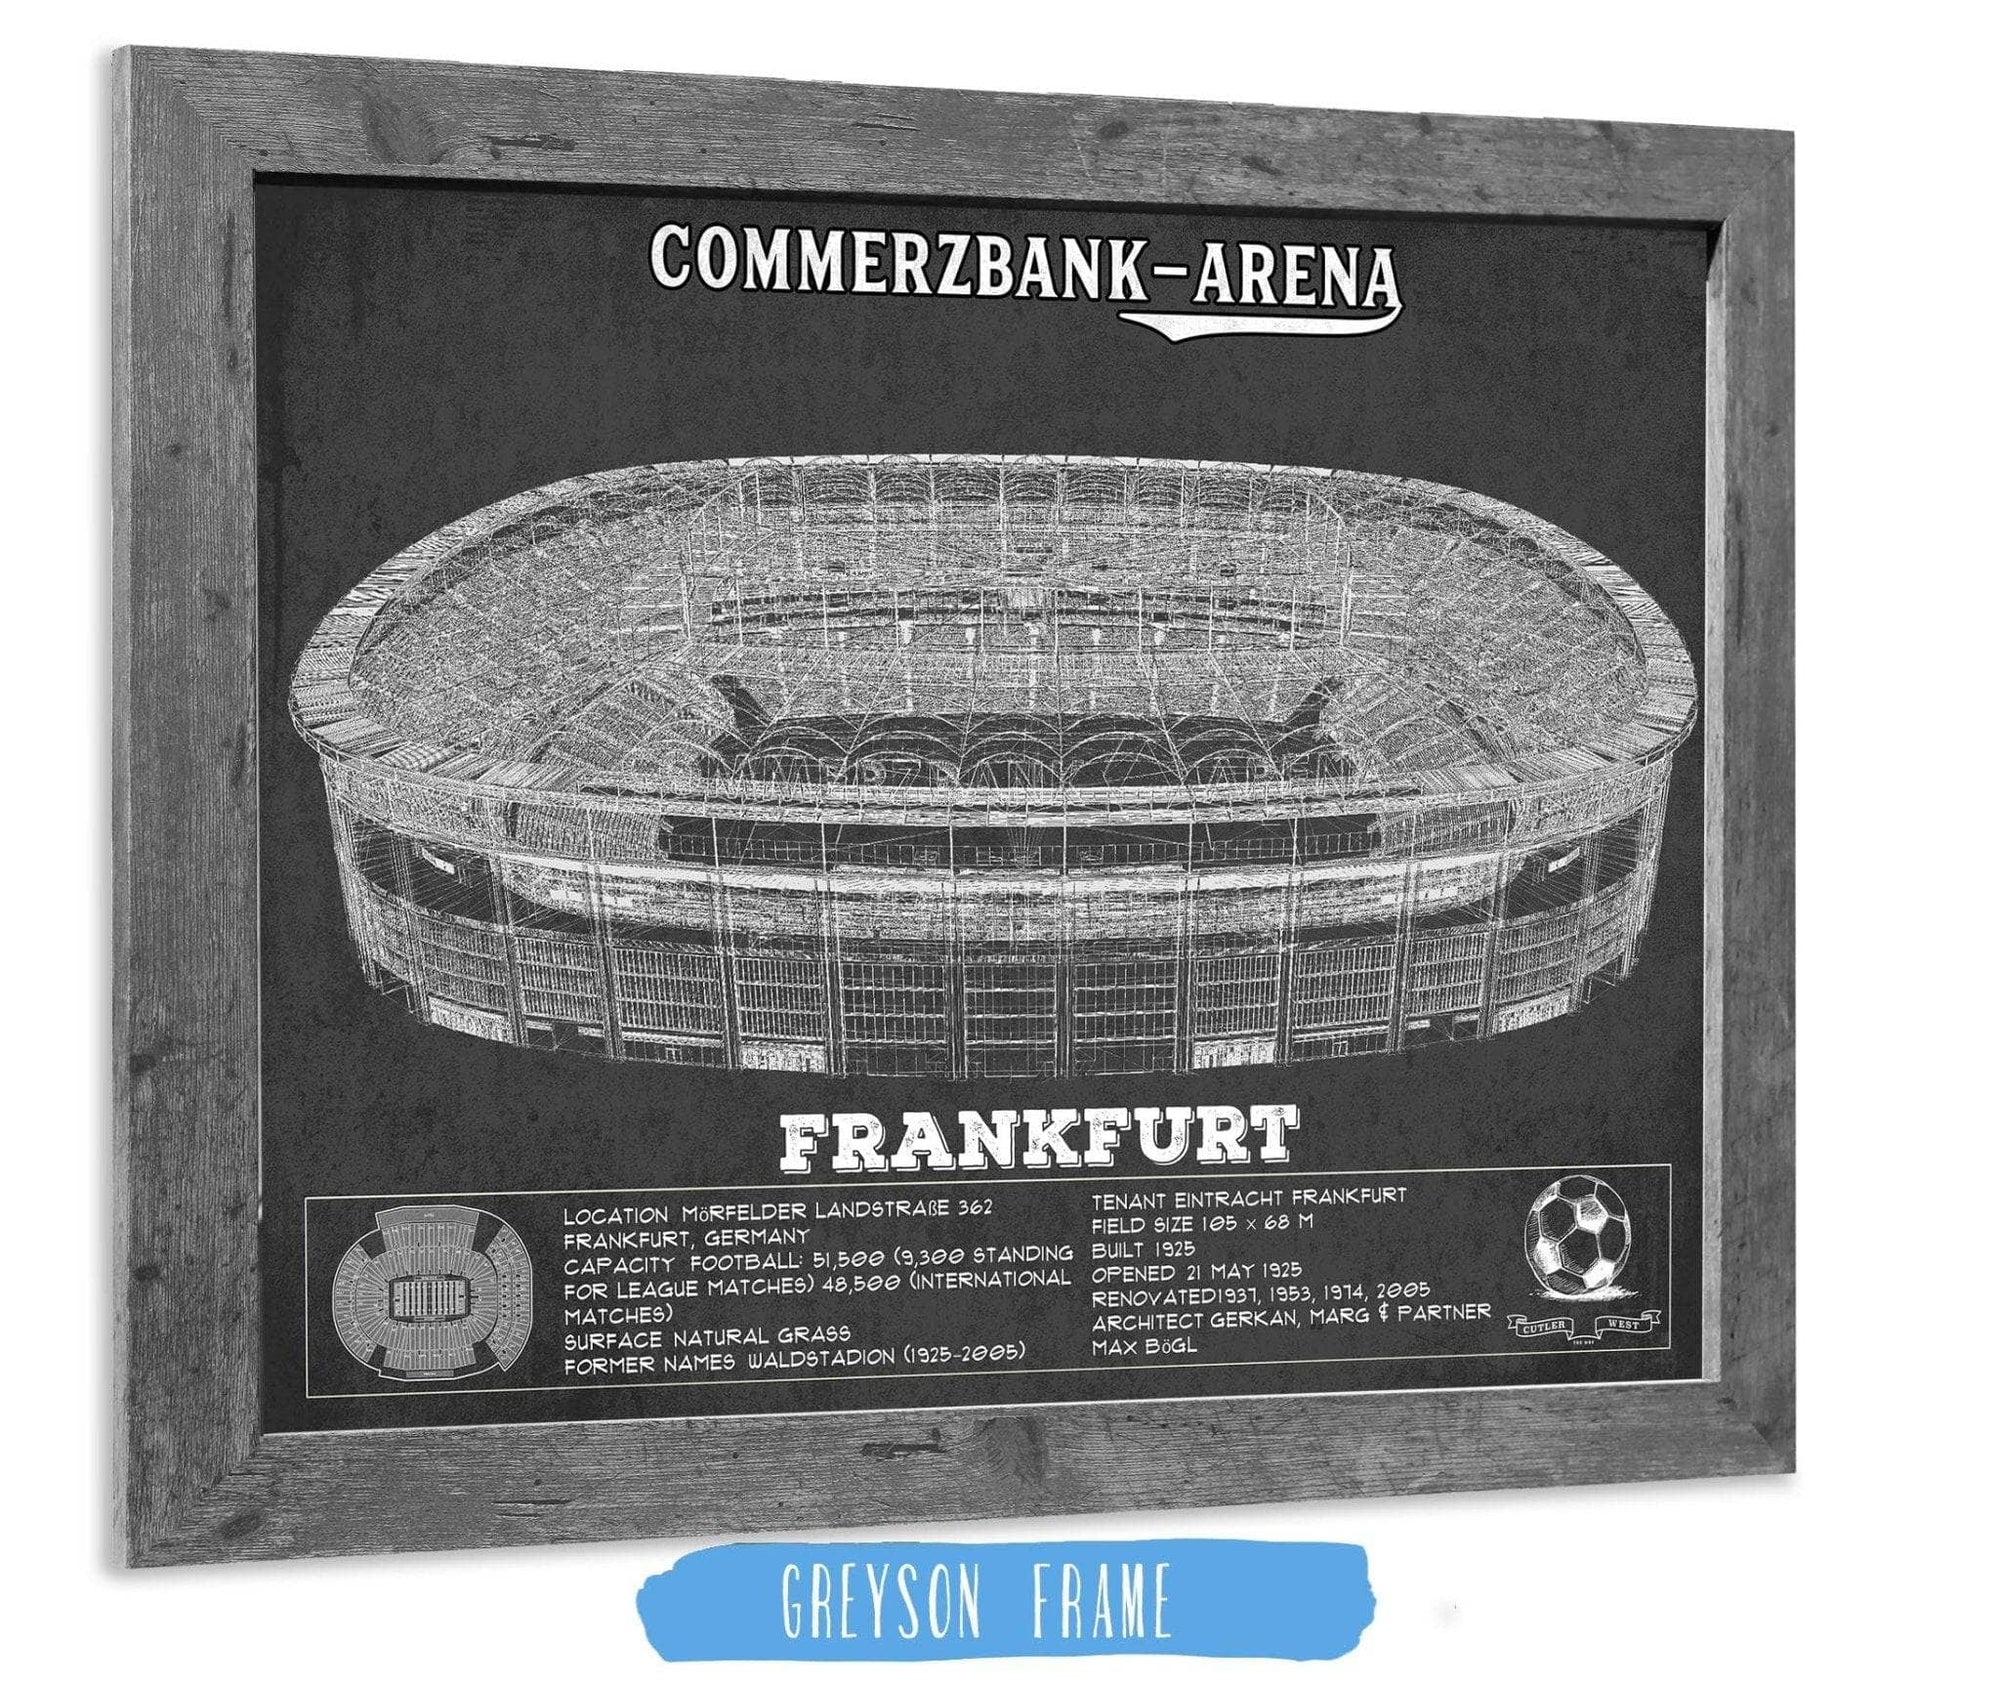 Cutler West Soccer Collection Eintracht Frankfurt FC - Commerzbank-Arena Soccer Print